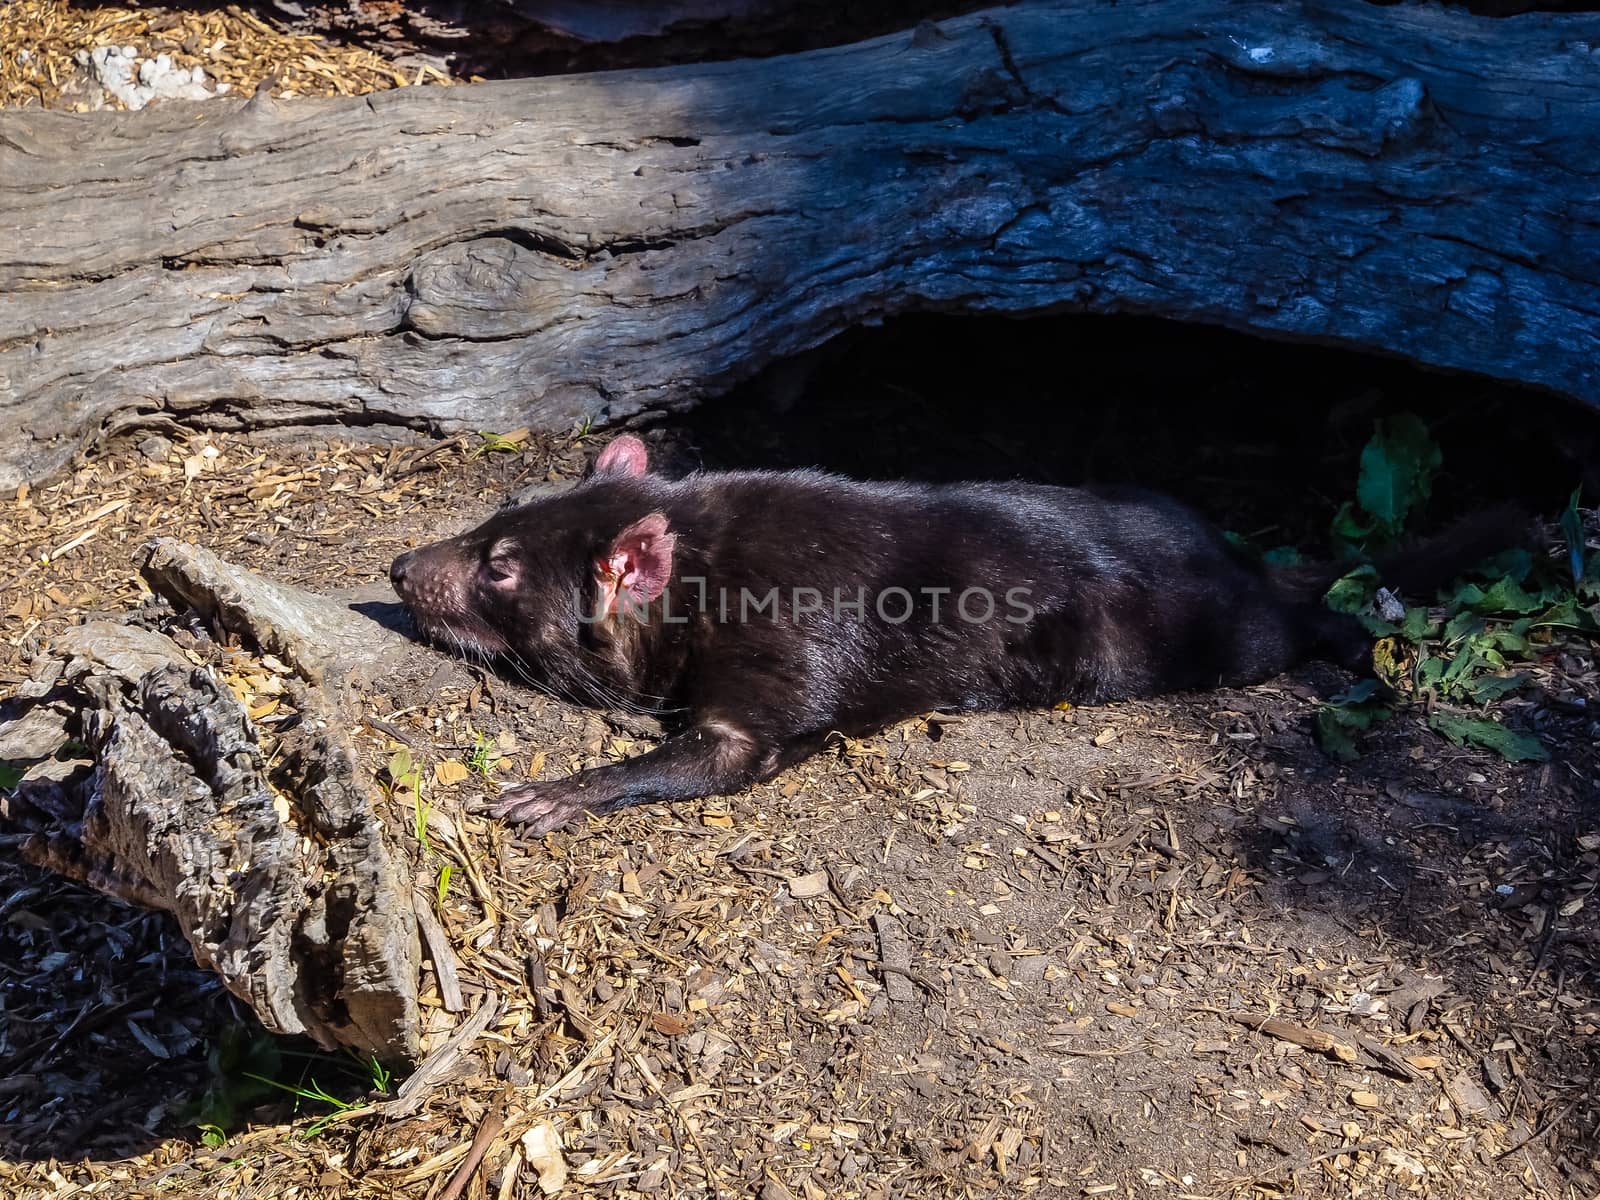 Tasmanian devil, little nocturnal Australian animal